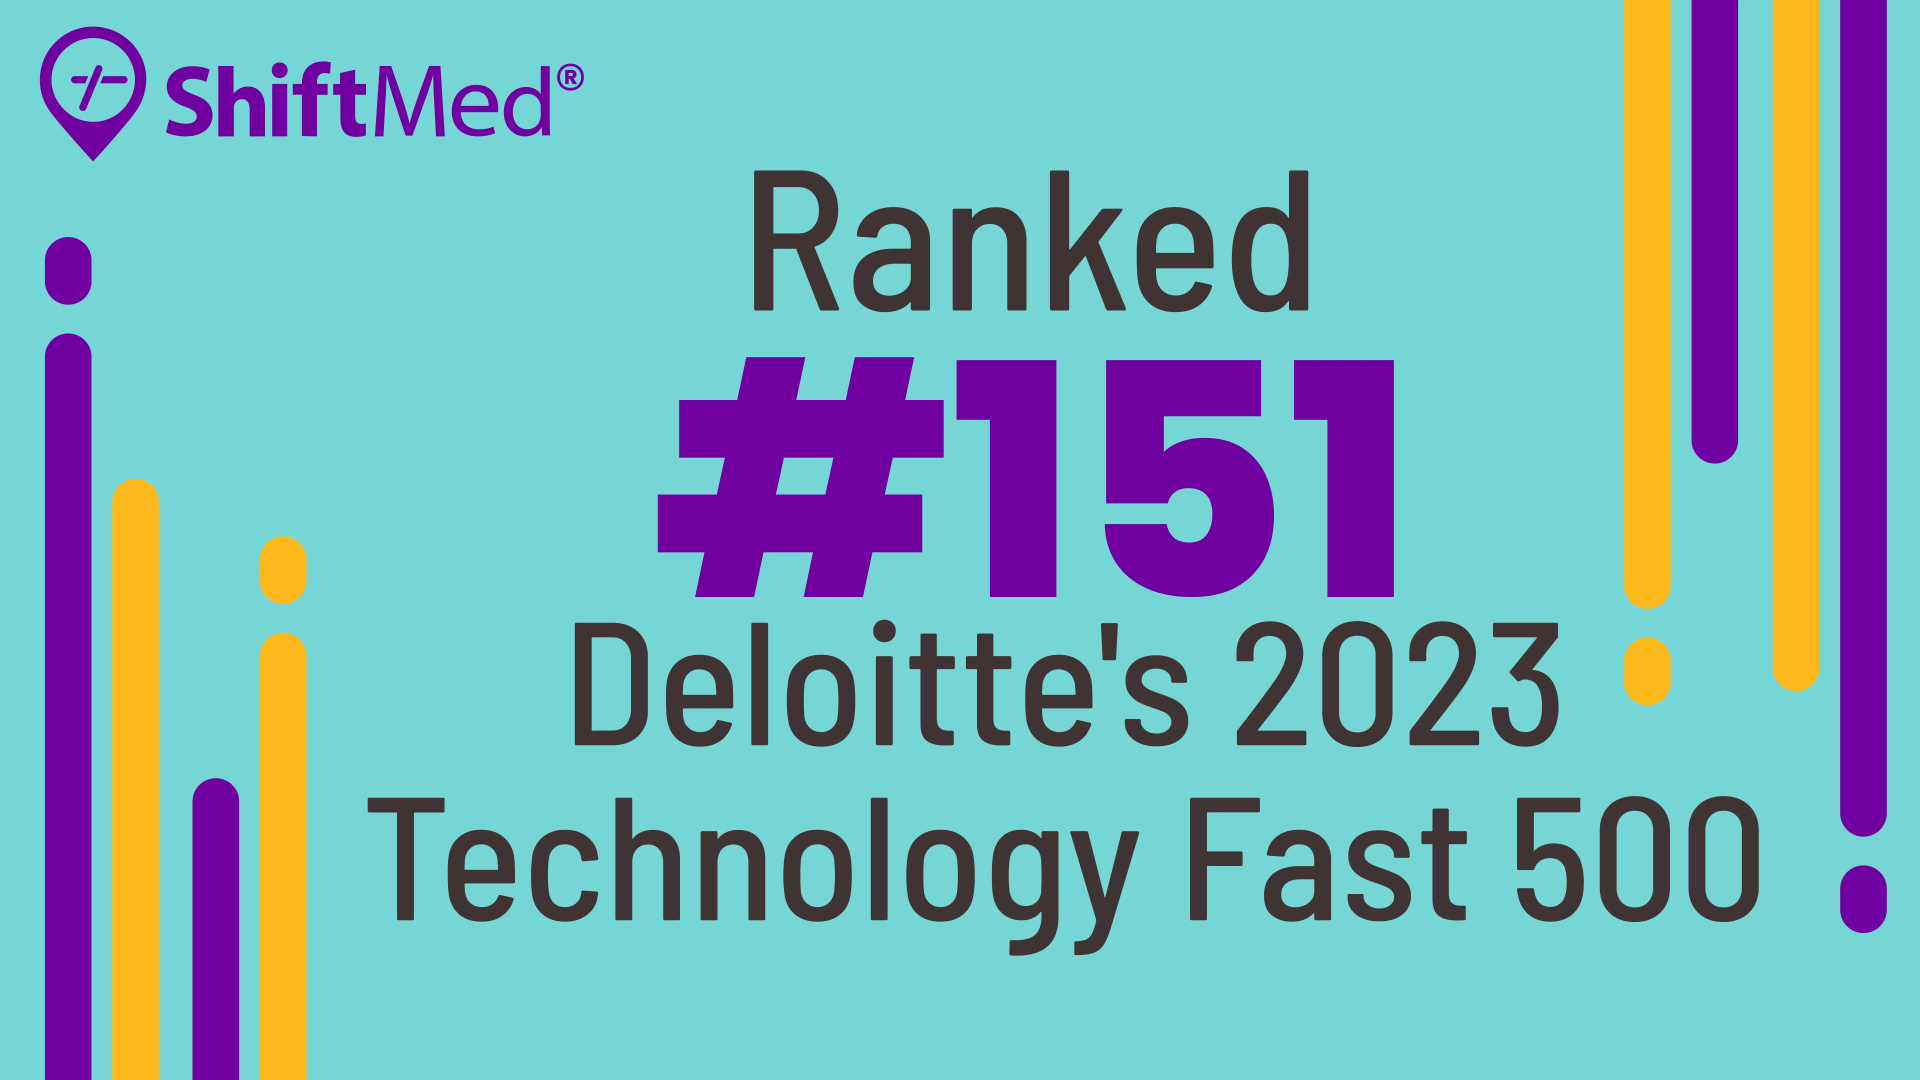 ShiftMed ranked #151 Deloitte's 2023 Technology Fast 500